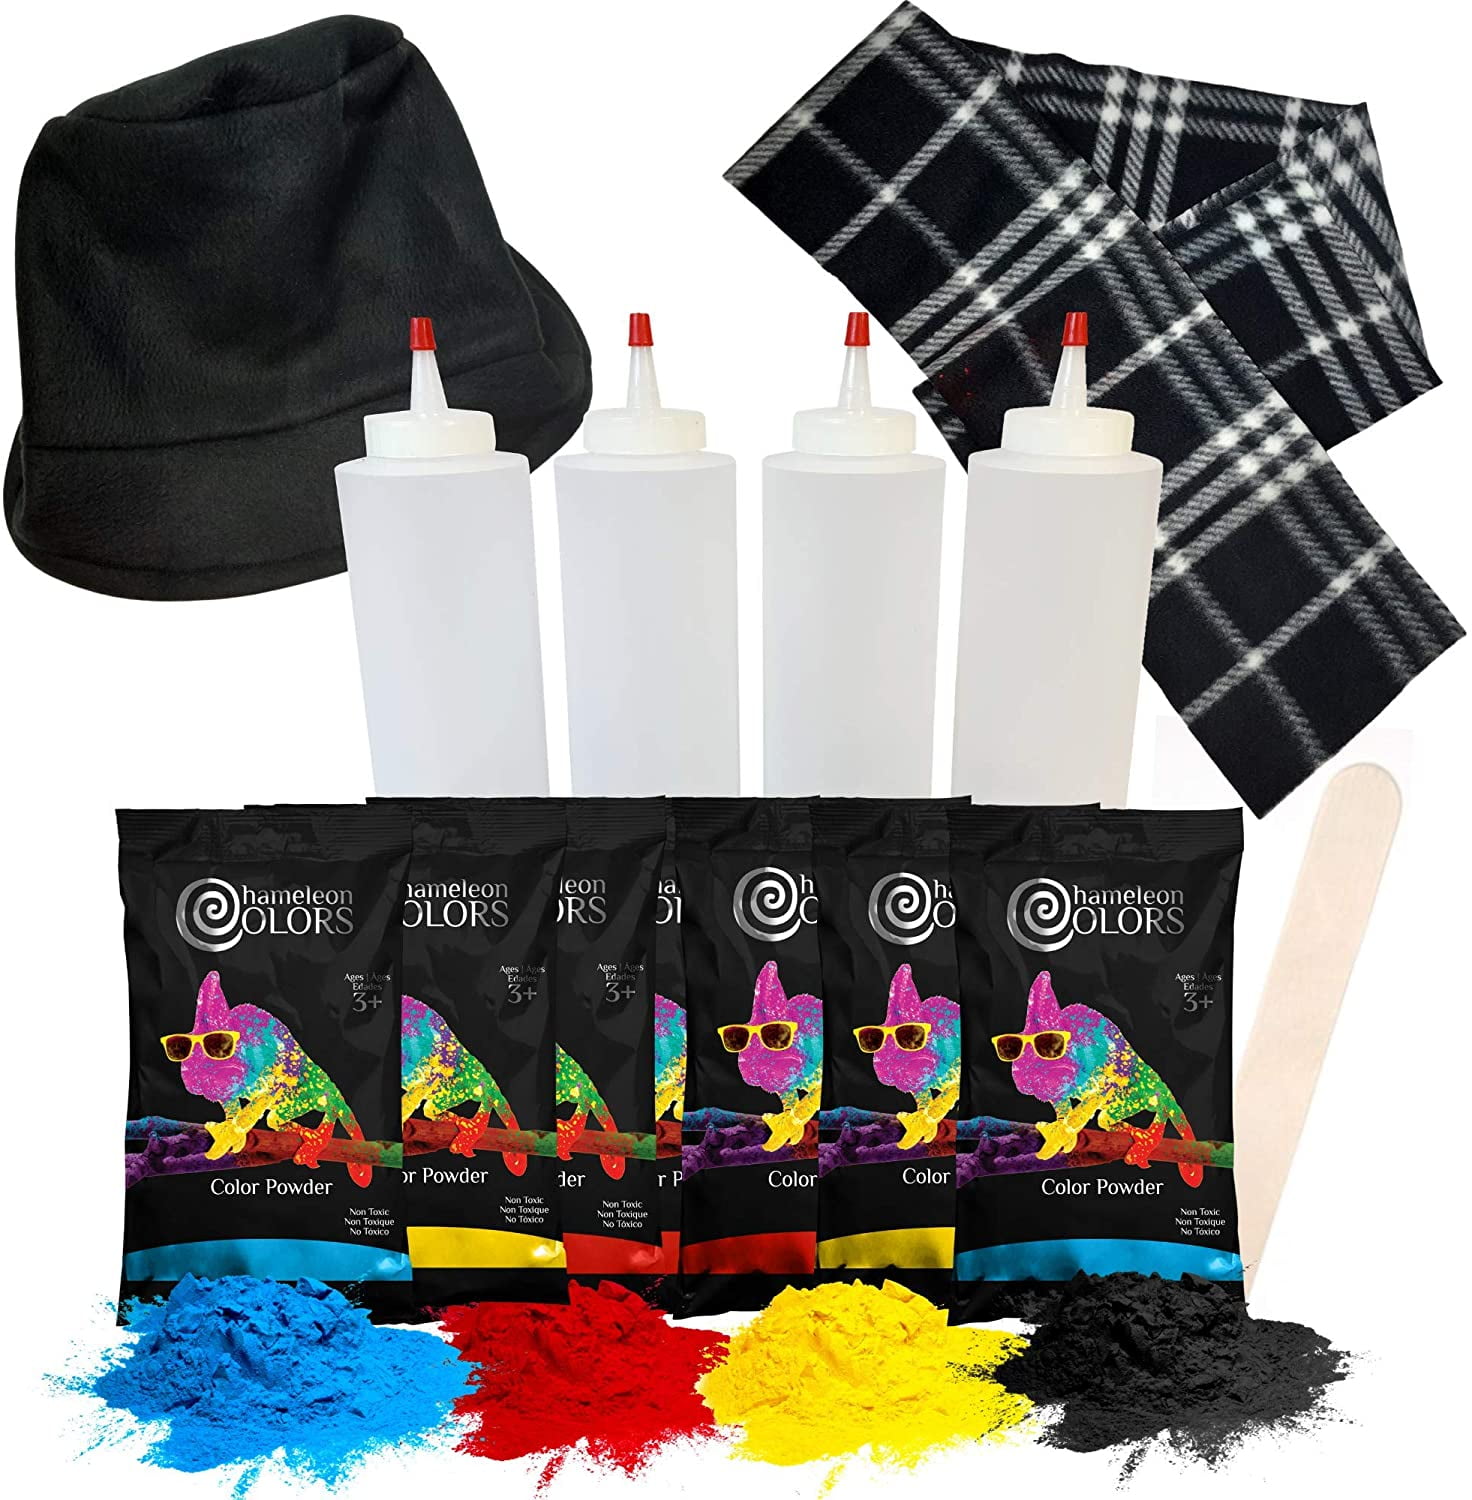 Chameleon Colors Snow Painting Kit - 10 Pack - 5 Vibrant Colors - 5 Squirt  Bottles - Art Craft Kit for Snow Decorations - Color Powder Snow Paint 